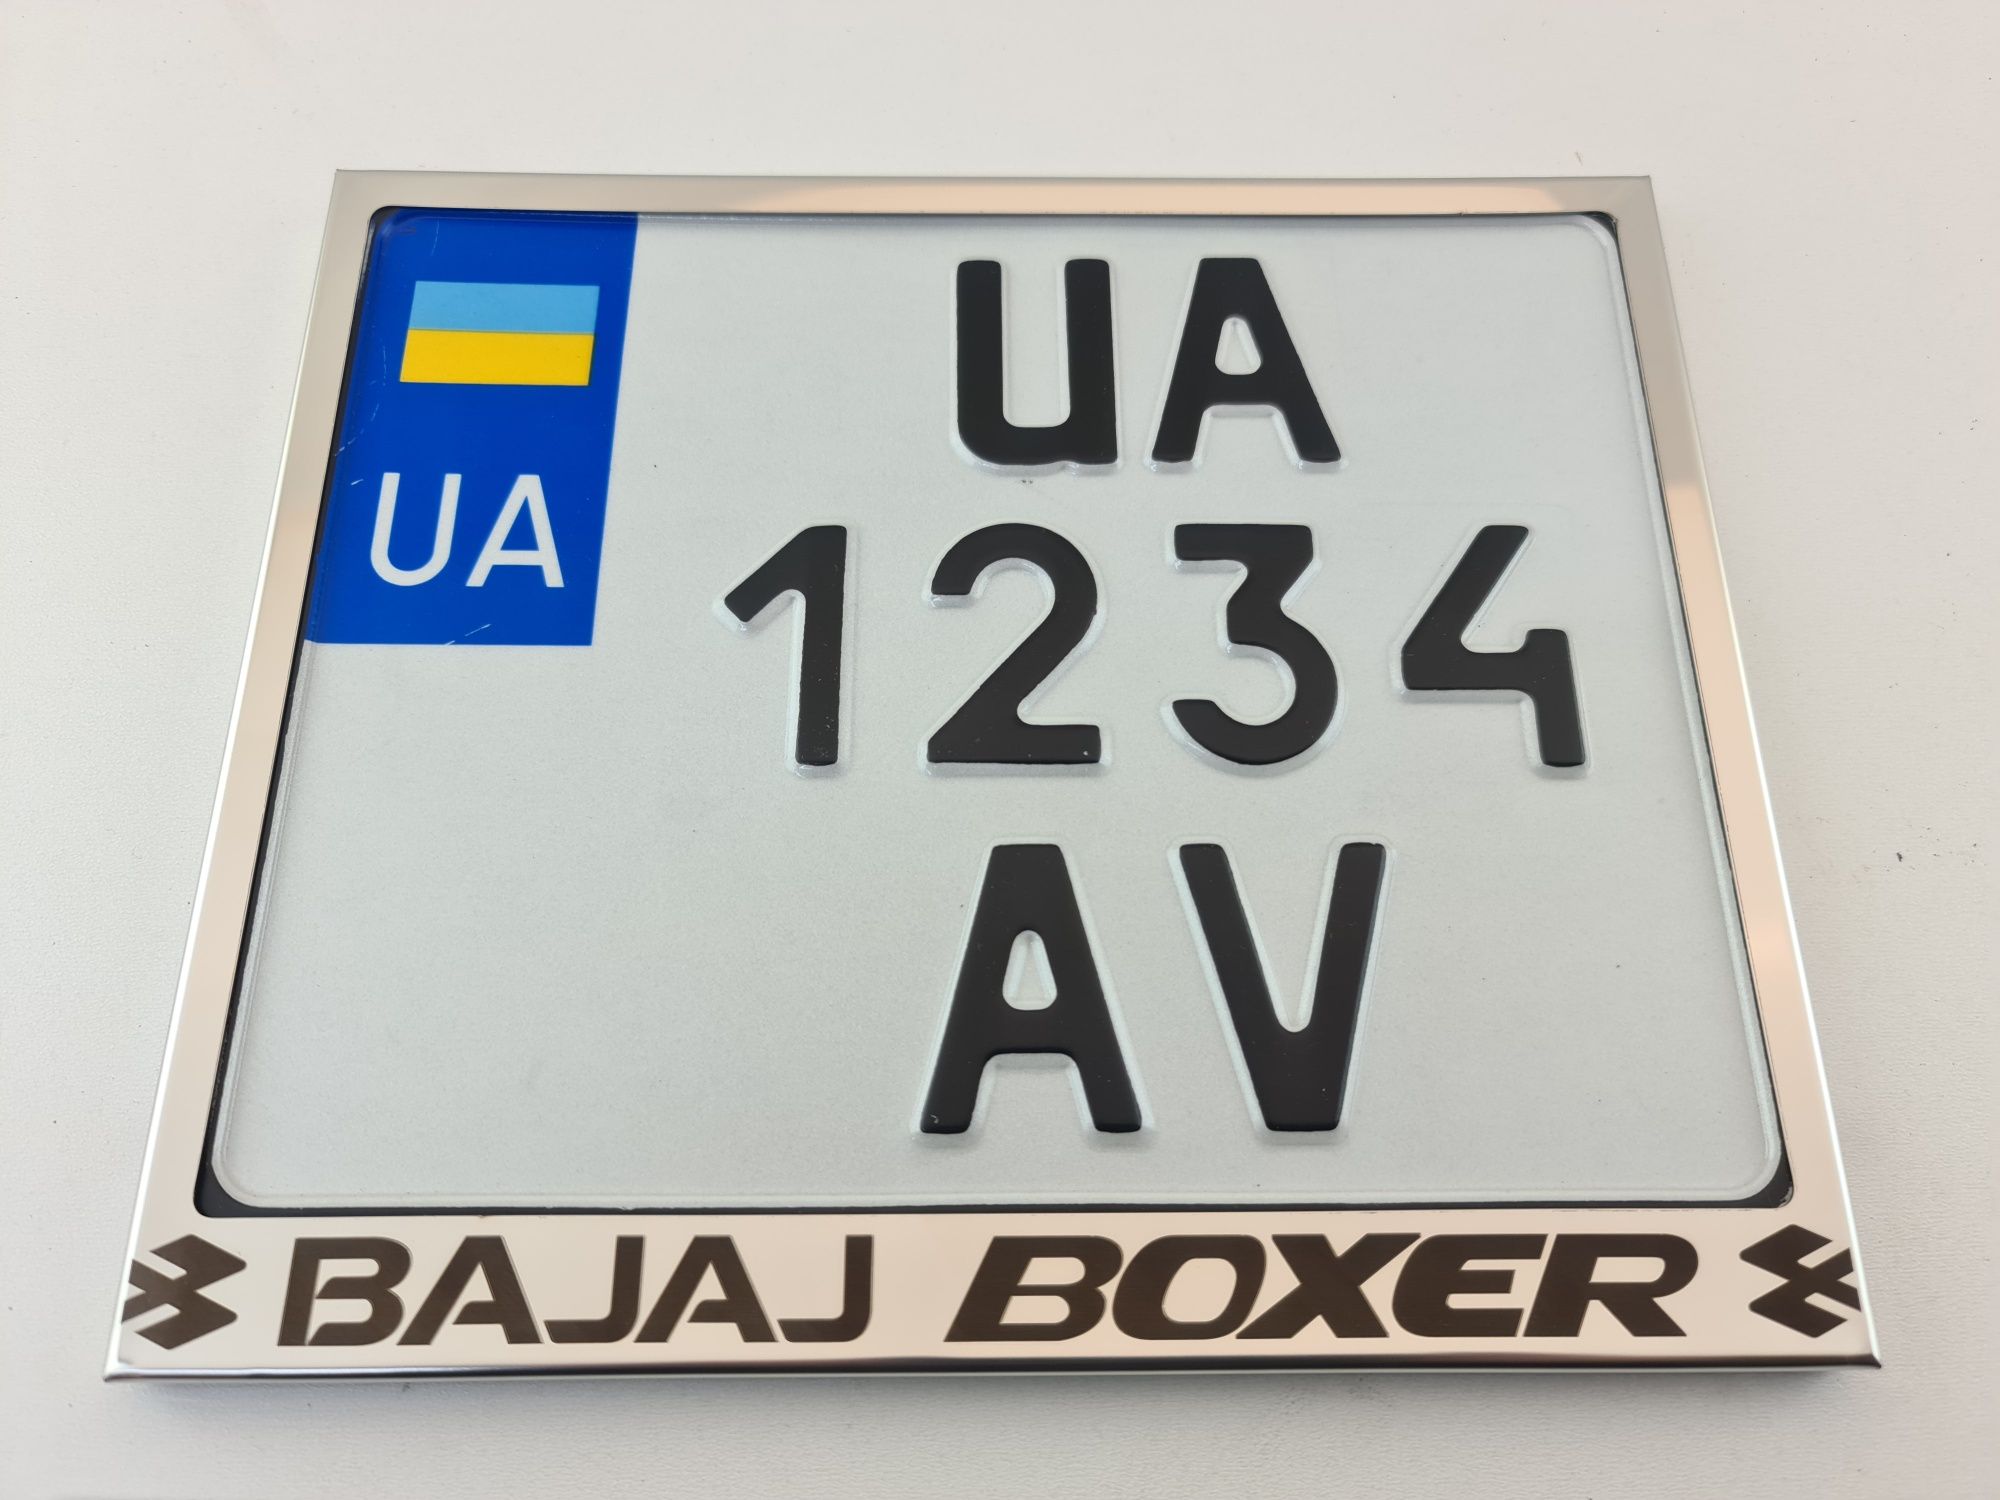 Bajaj BOXER рамка для мото номера Украины подномерник мотоцикл баджадж